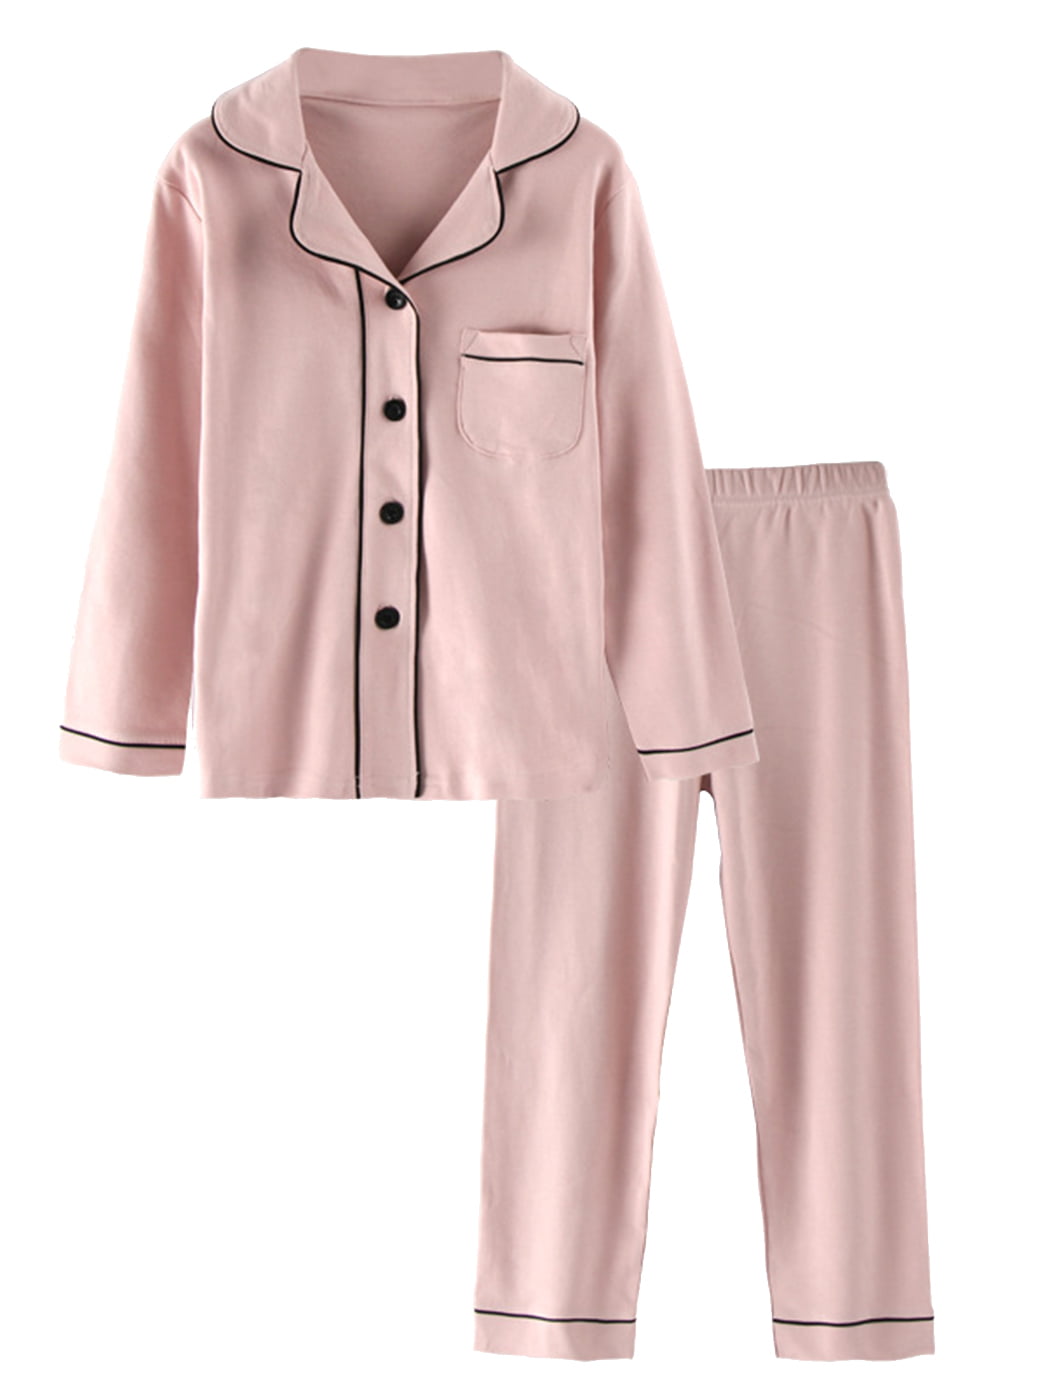 Womens Pajamas Set Long Sleeve Sleepwear Button Down Nightwear Soft Pj ...